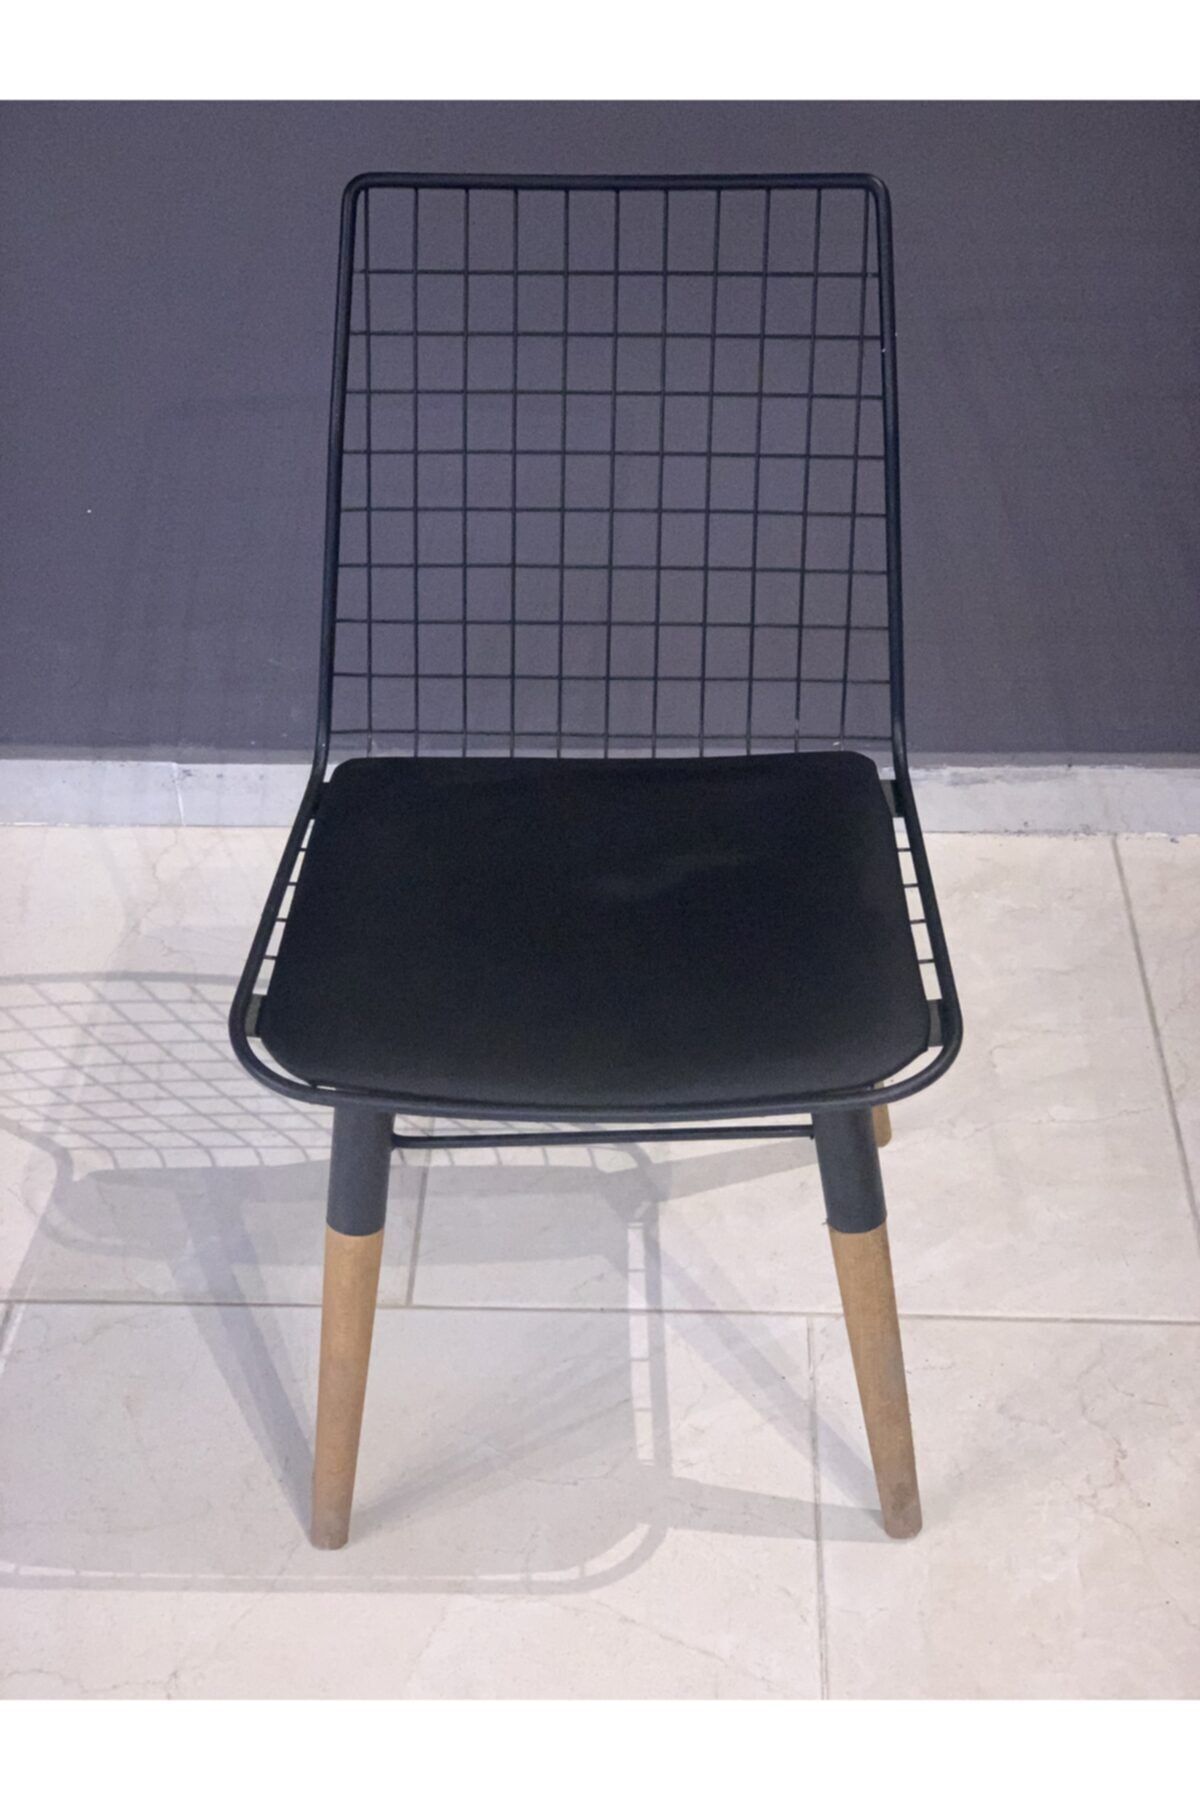 istanbul outlet Modern Ahşap Ayaklı Metal Sandalye